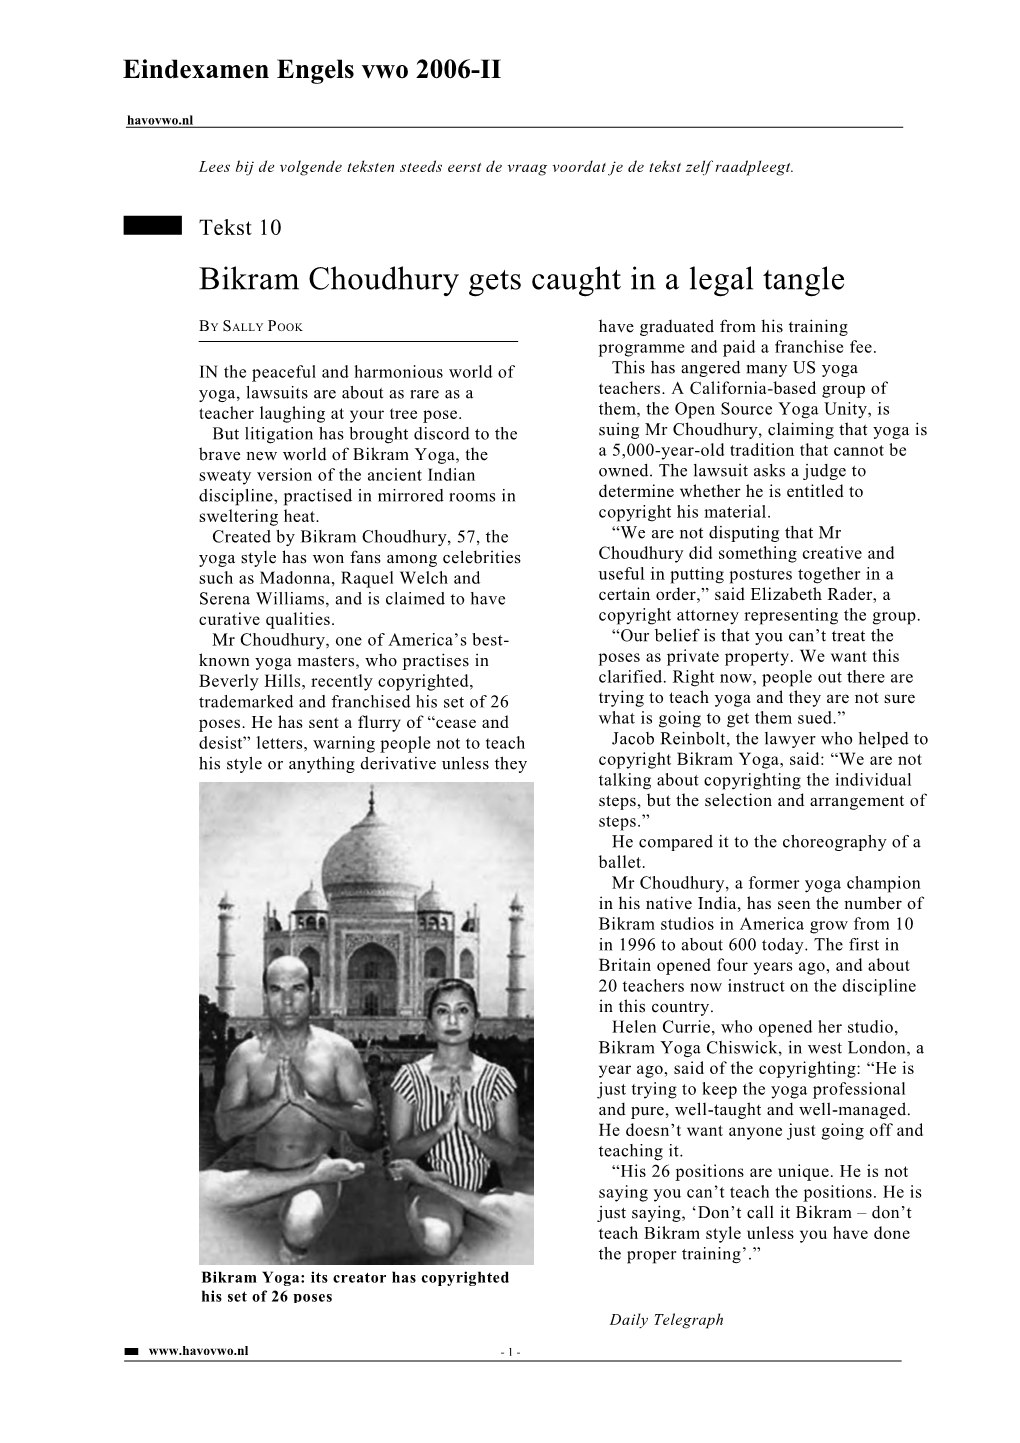 Bikram Choudhury Gets Caught in a Legal Tangle